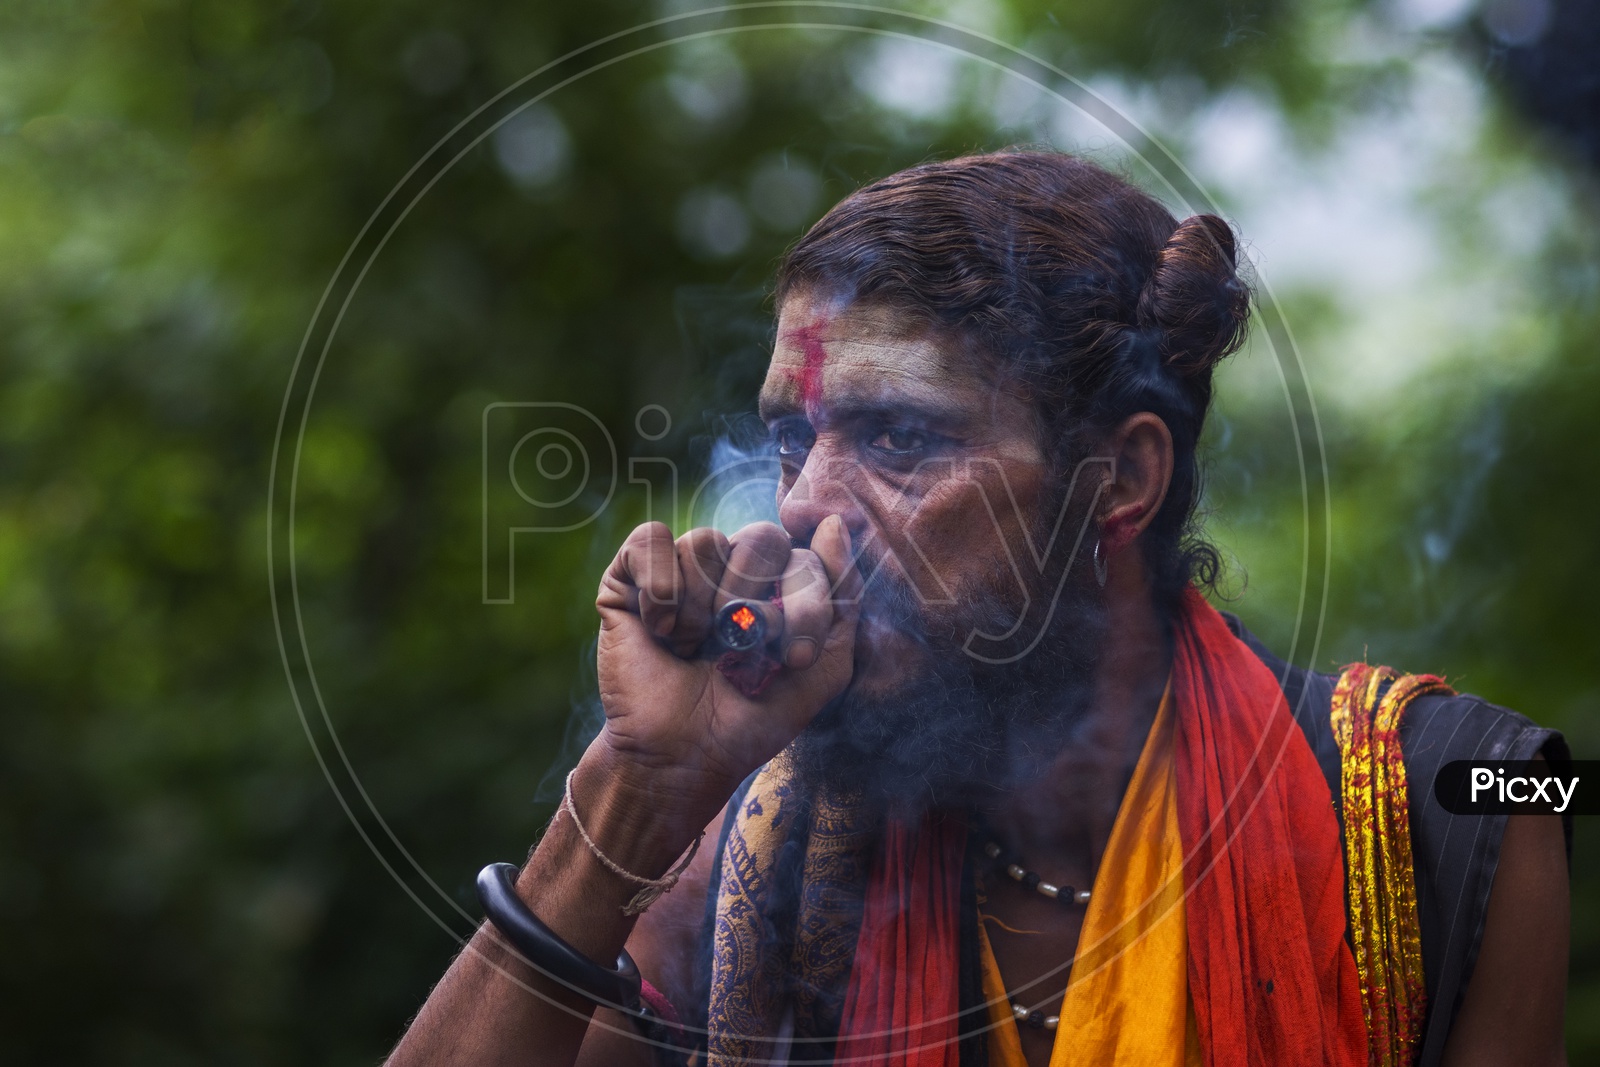 Portrait of an old man smoking - sage